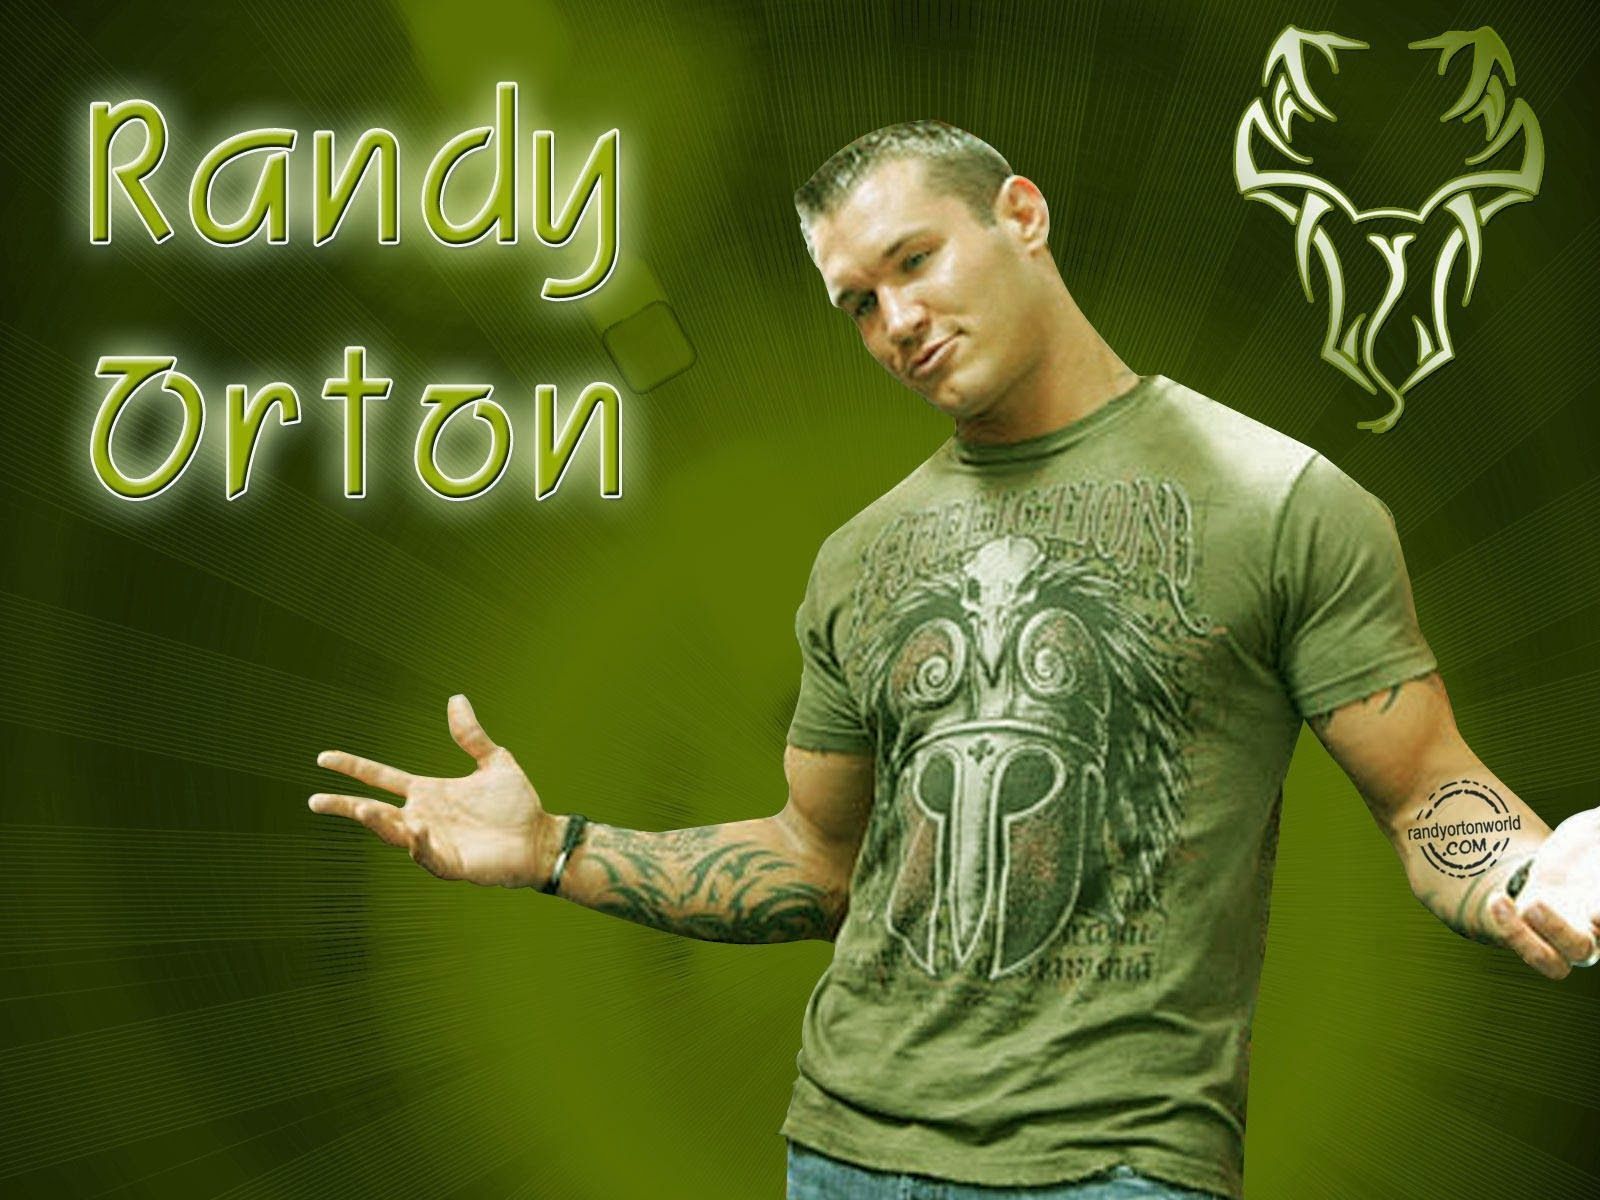 Wwe Randy Orton Smiley Faces Wallpaper Kb